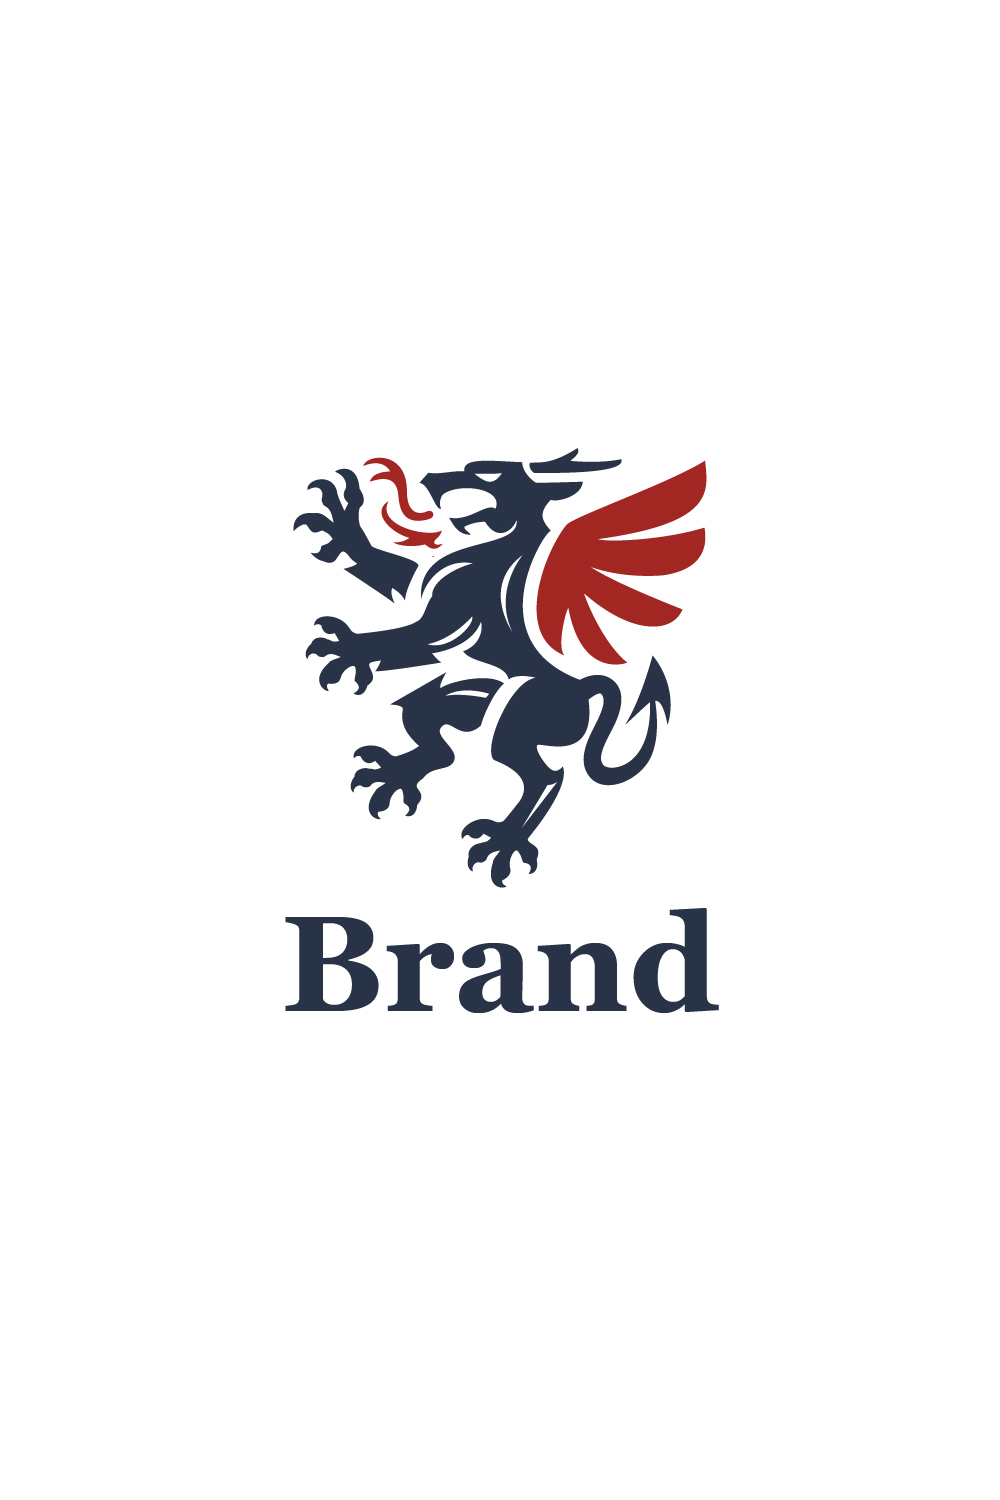 Dragon Heraldic Logos pinterest preview image.